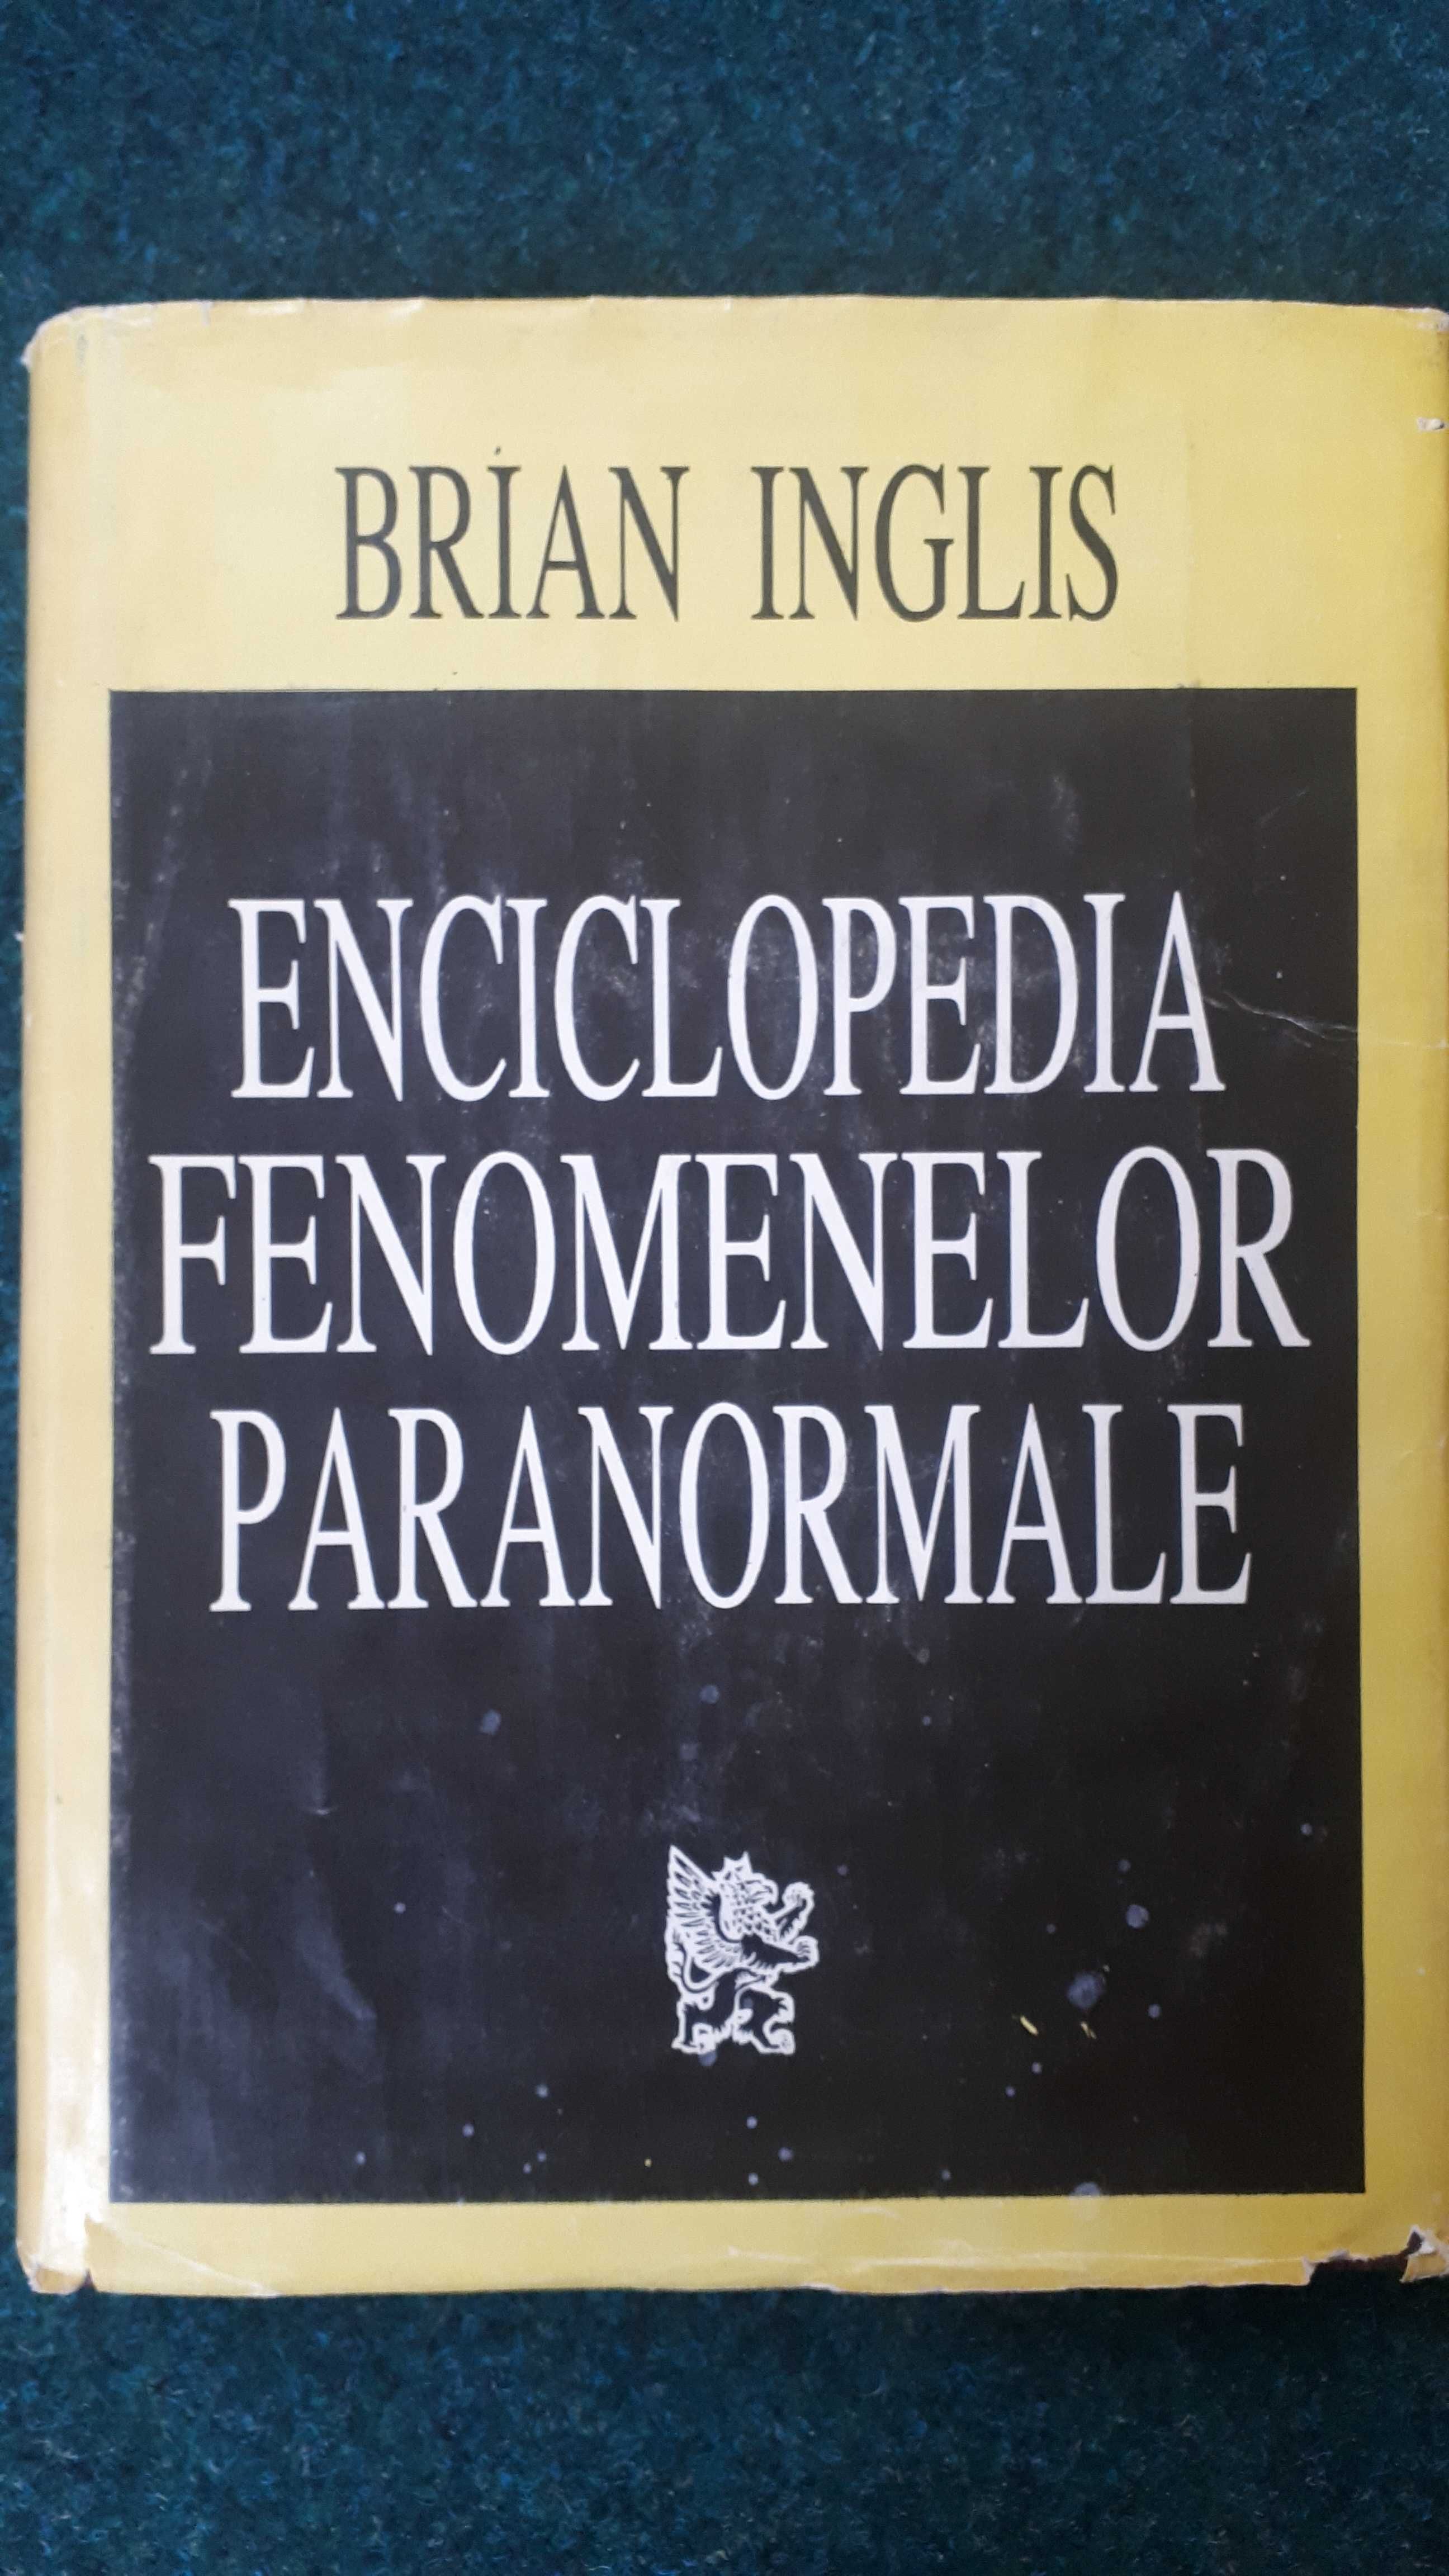 Enciclopedia fenomenelor paranormale, Brian Inglis